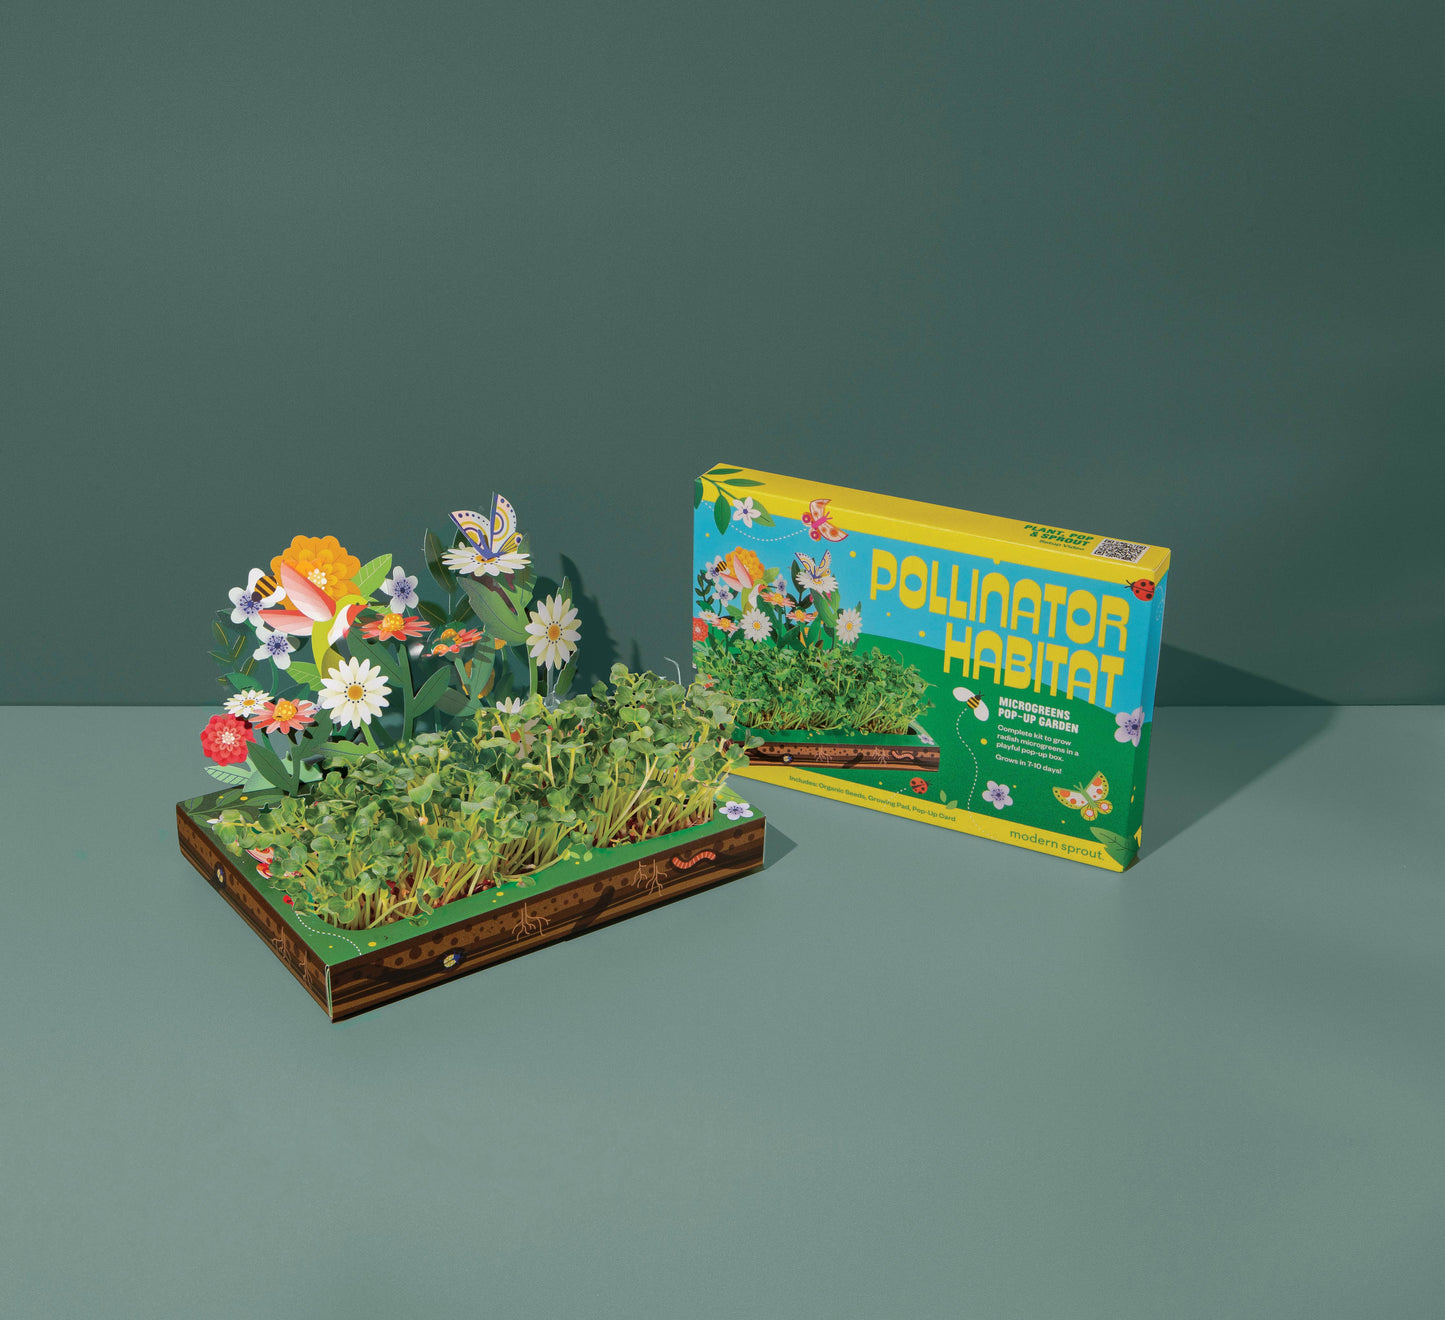 Modern Sprout - Microgreens - Pollinator